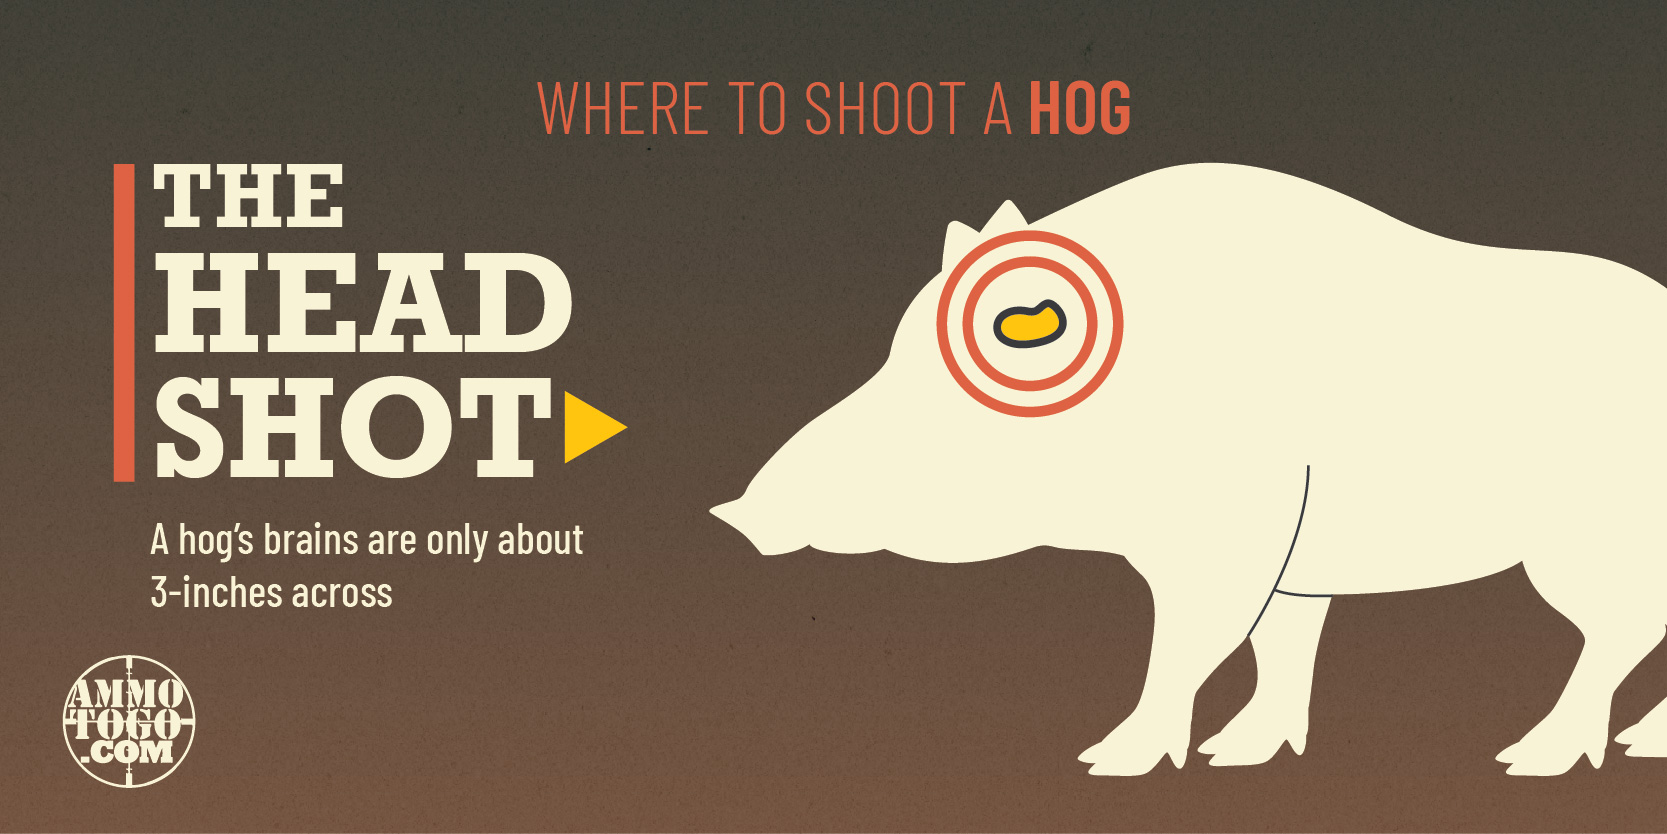 Where to shoot a hog with a head shot